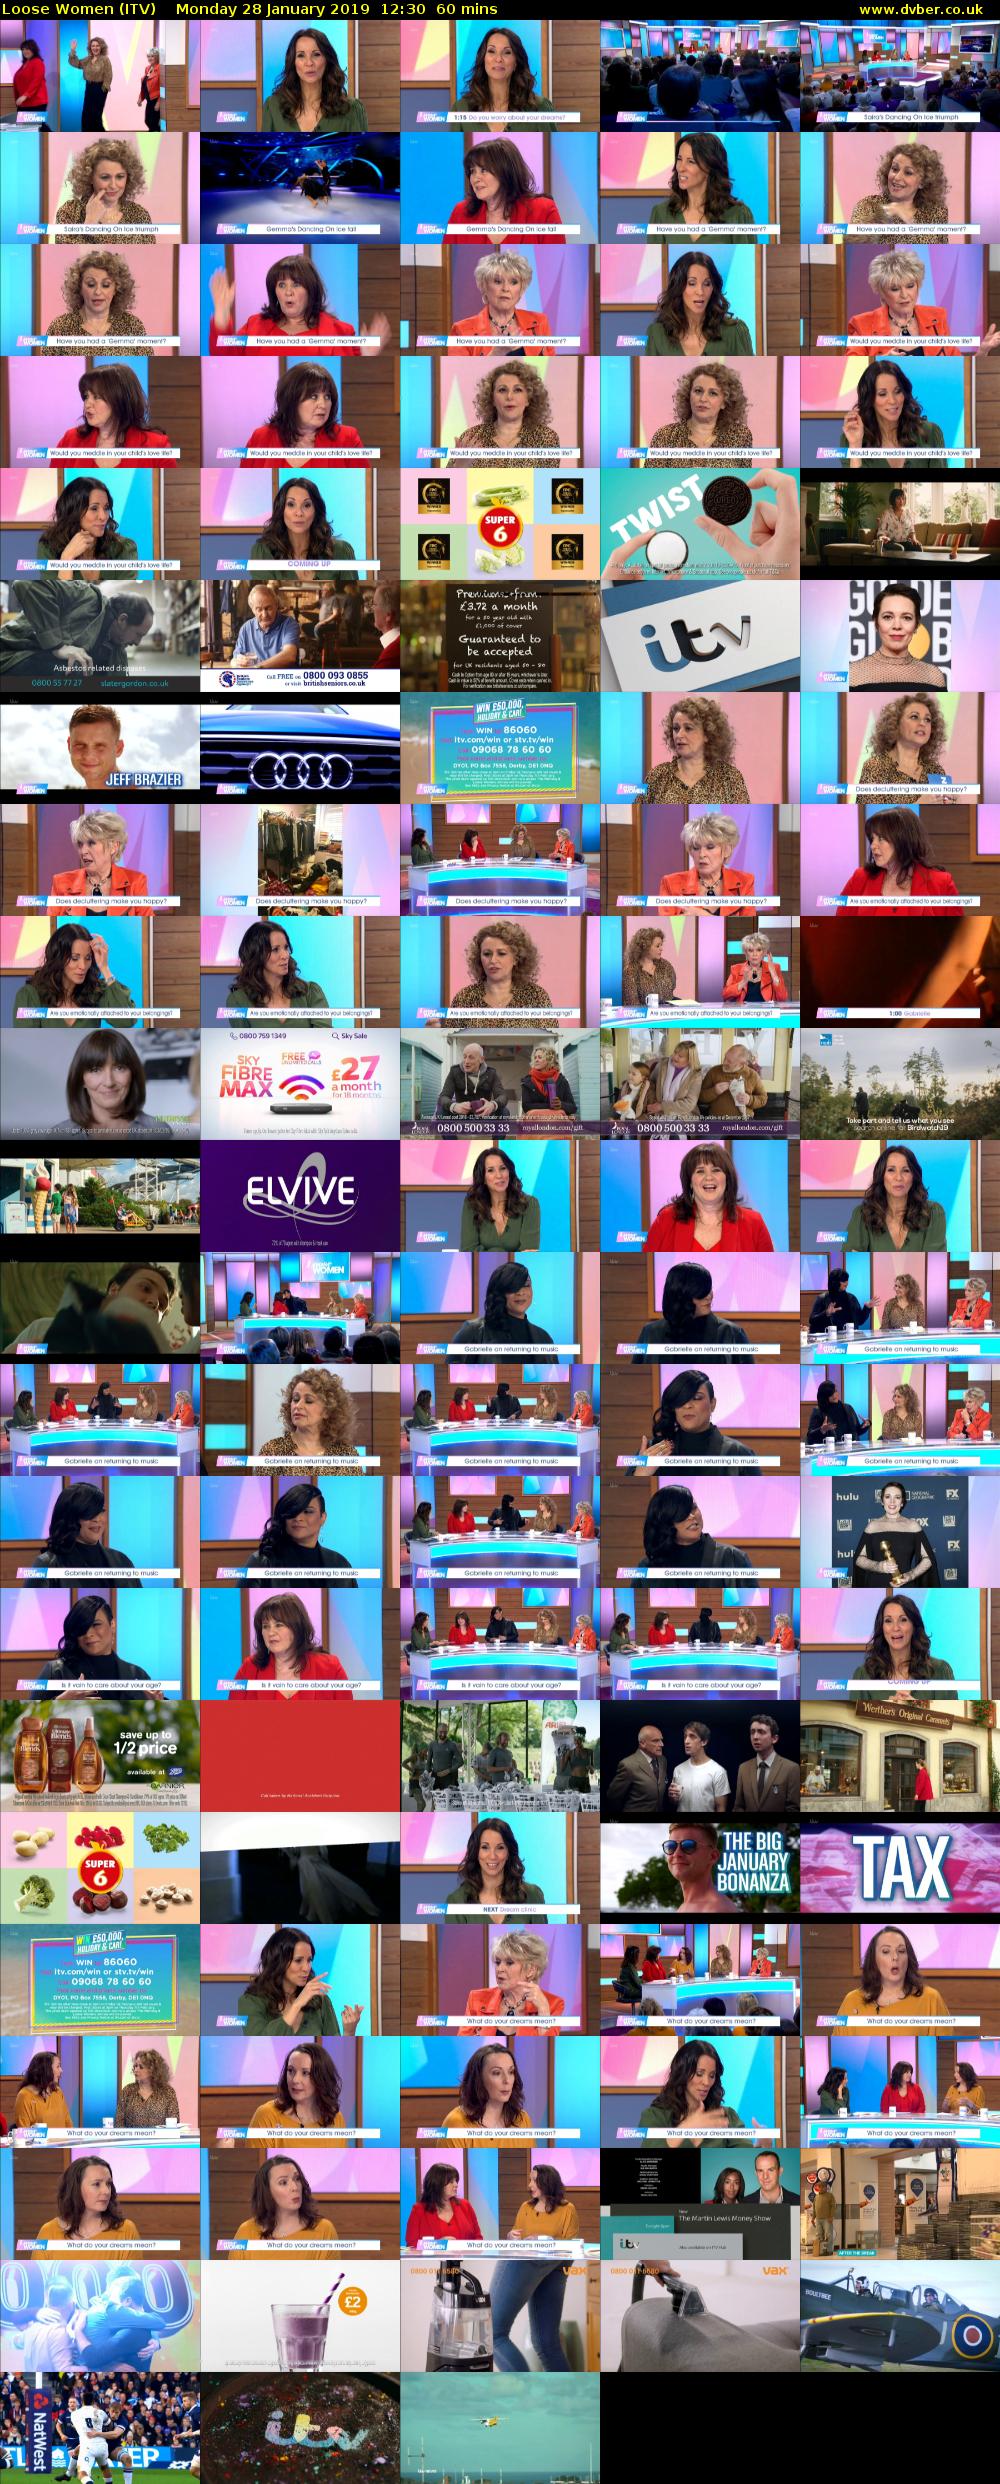 Loose Women (ITV) Monday 28 January 2019 12:30 - 13:30